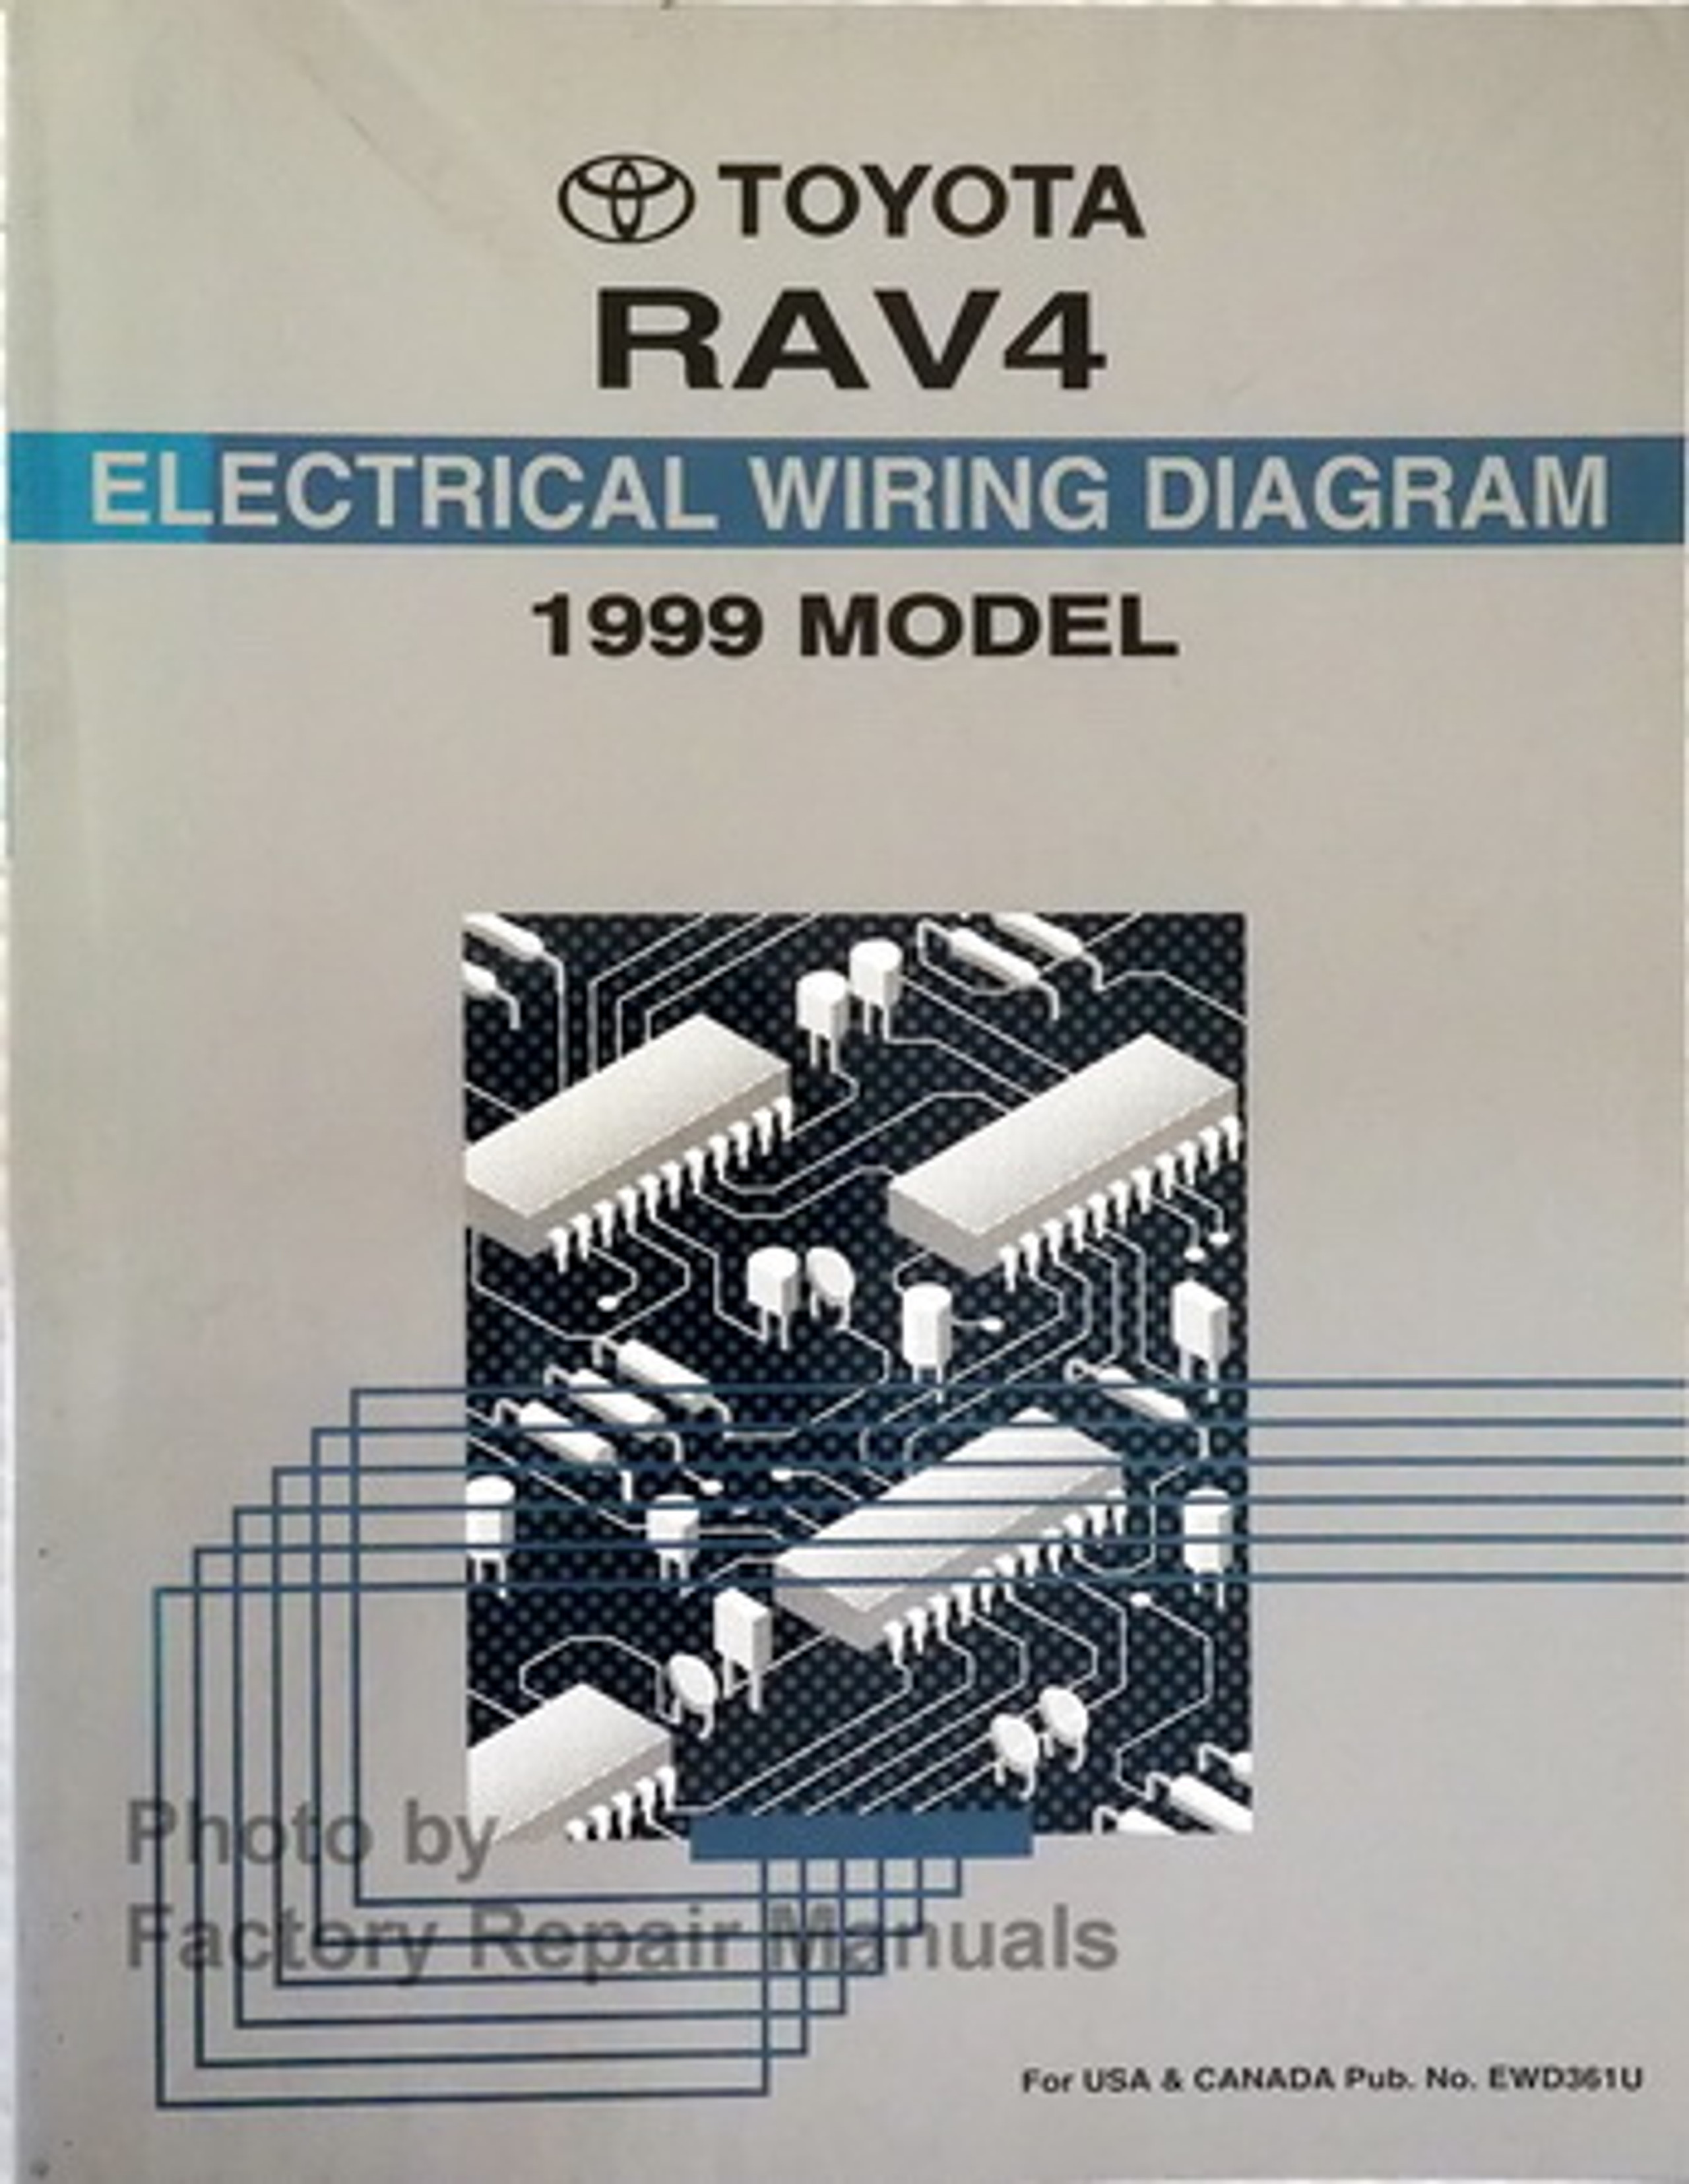 1999 Toyota Camry Electrical Wiring Diagrams Original Factory Manual